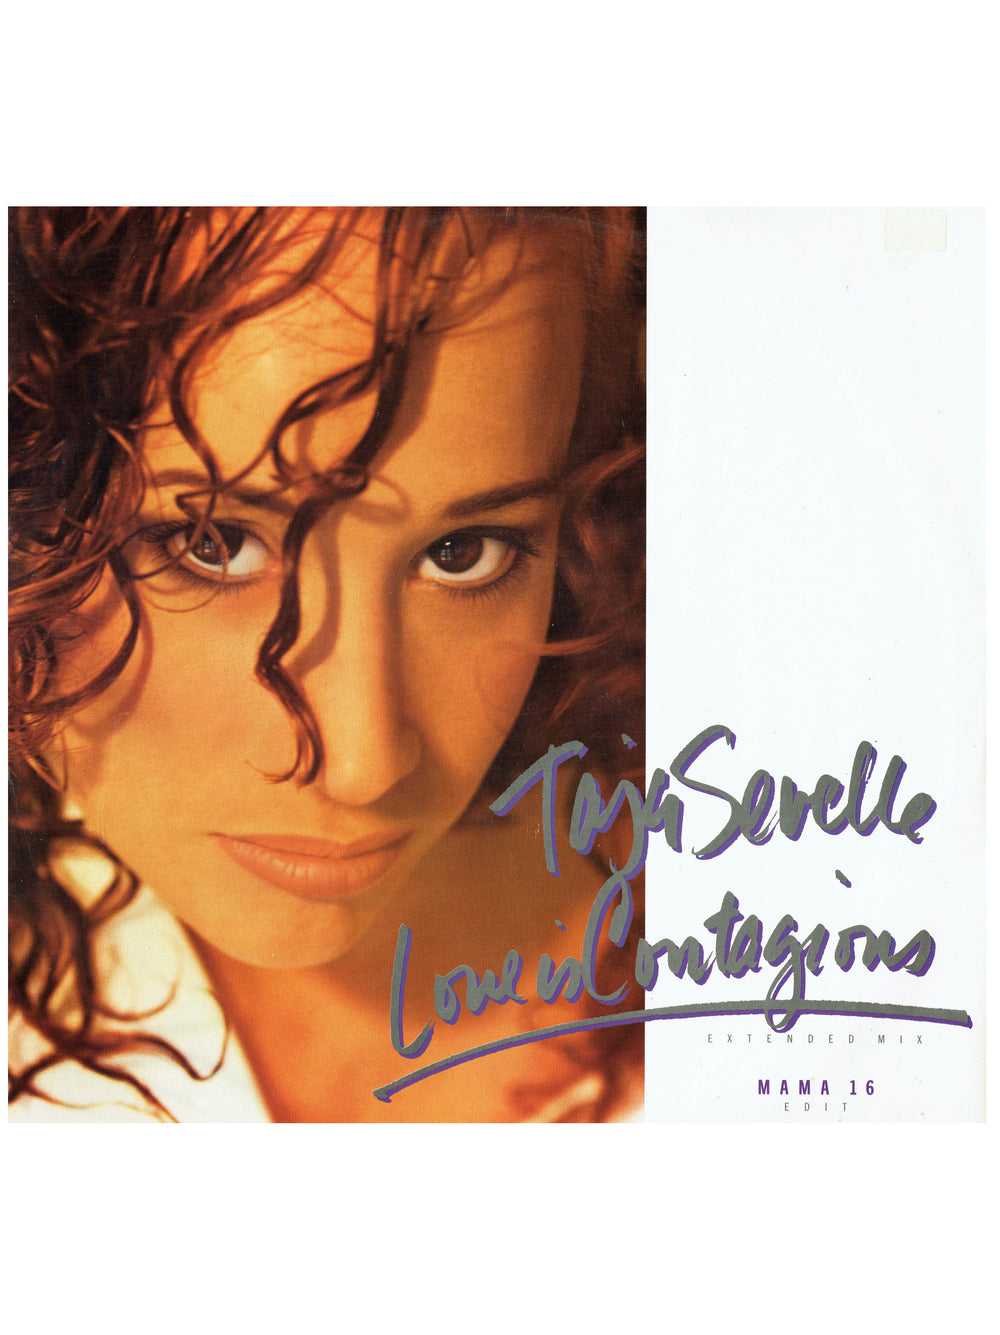 Taja Sevelle Love Is Contagious Ext 1987 12 Inch Vinyl UK W8257T